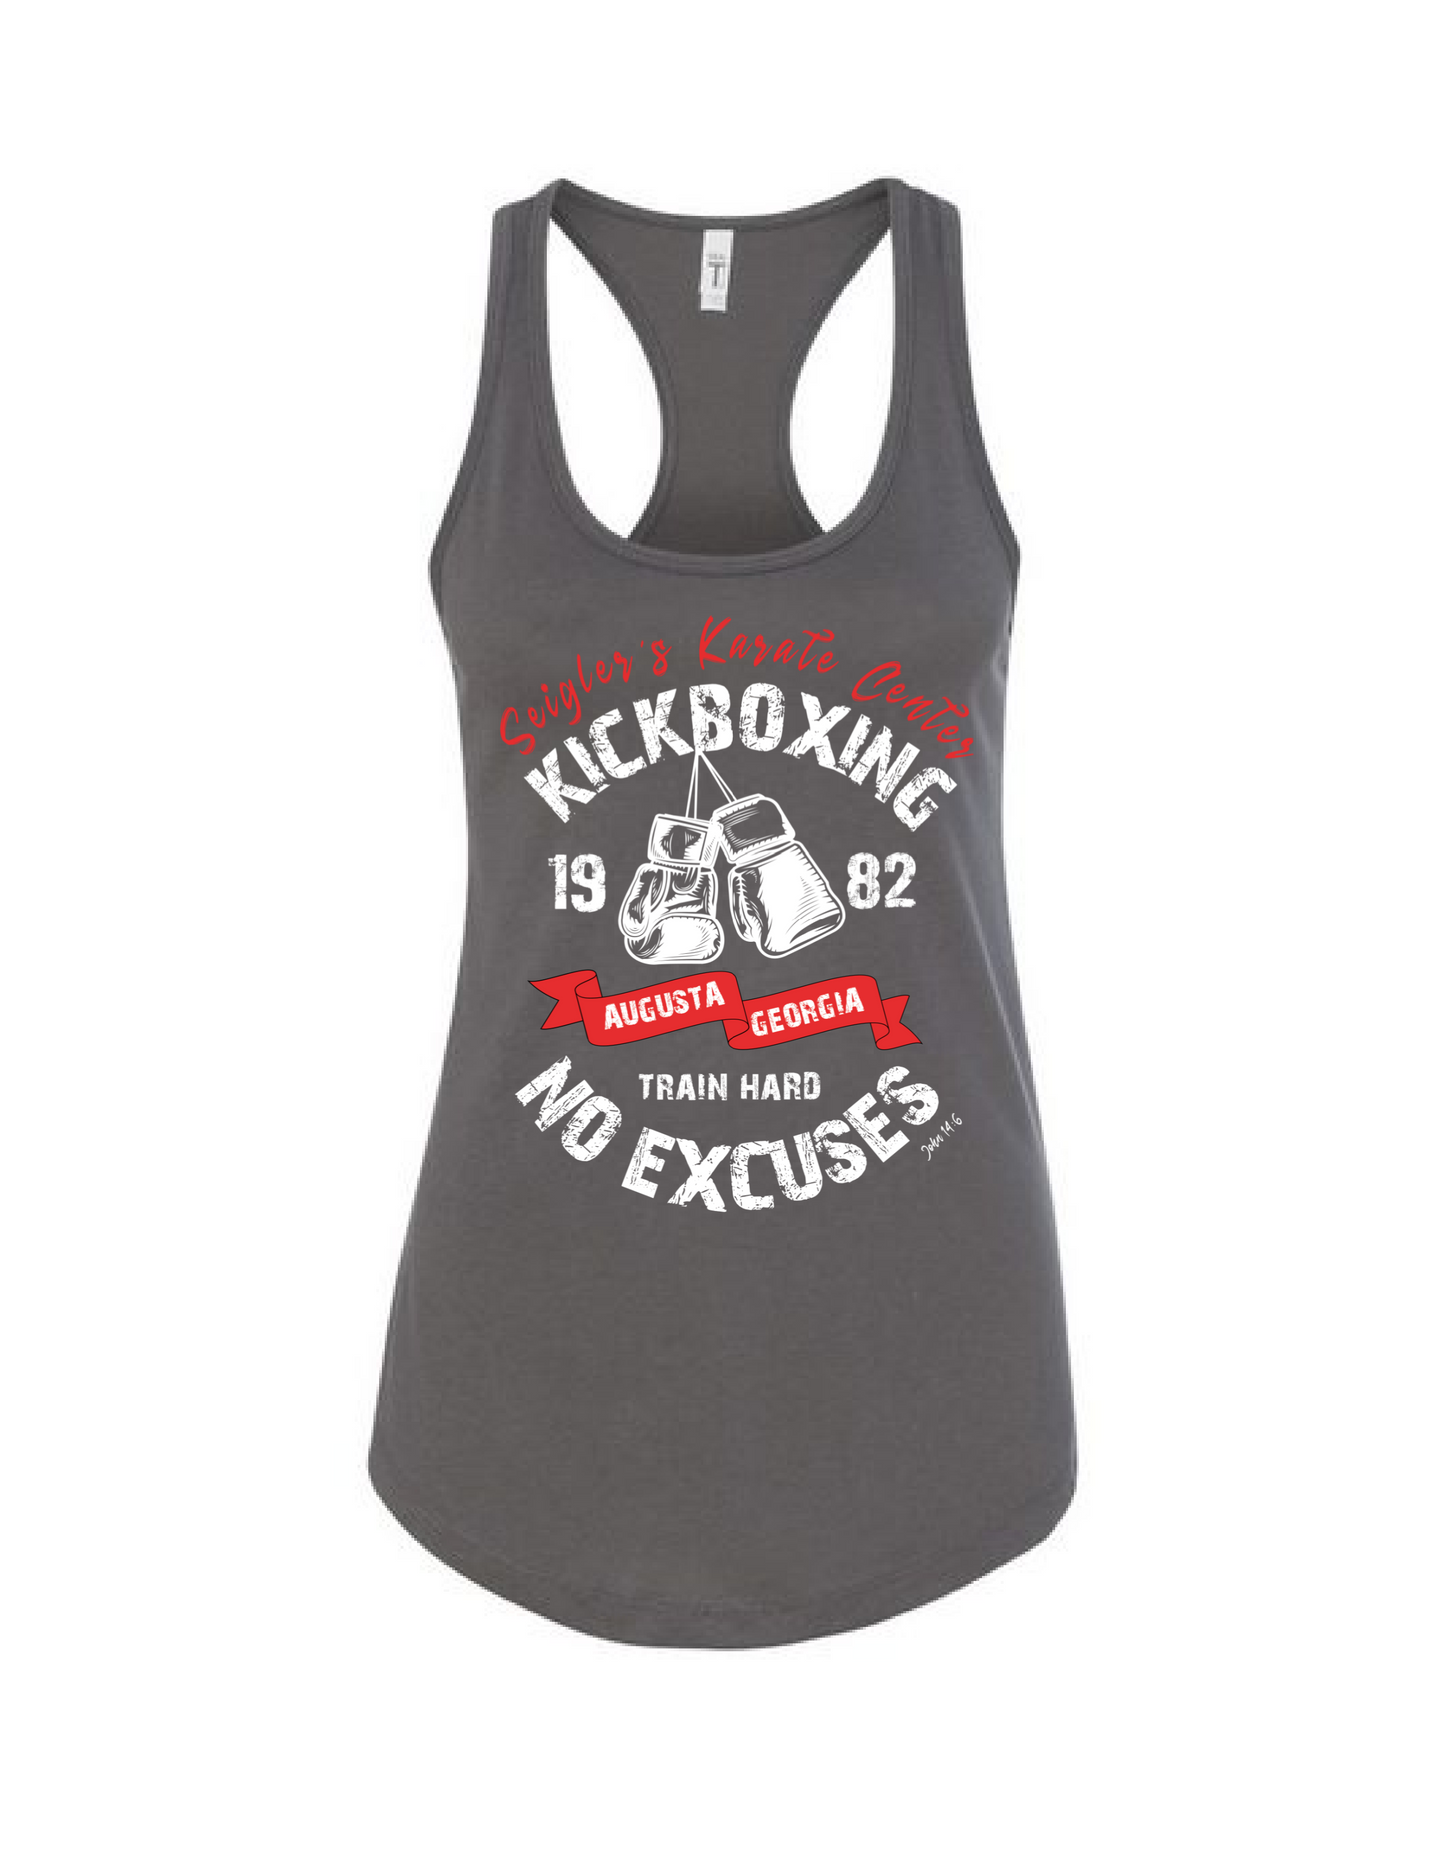 "No Excuses" Kickboxing Tank Top